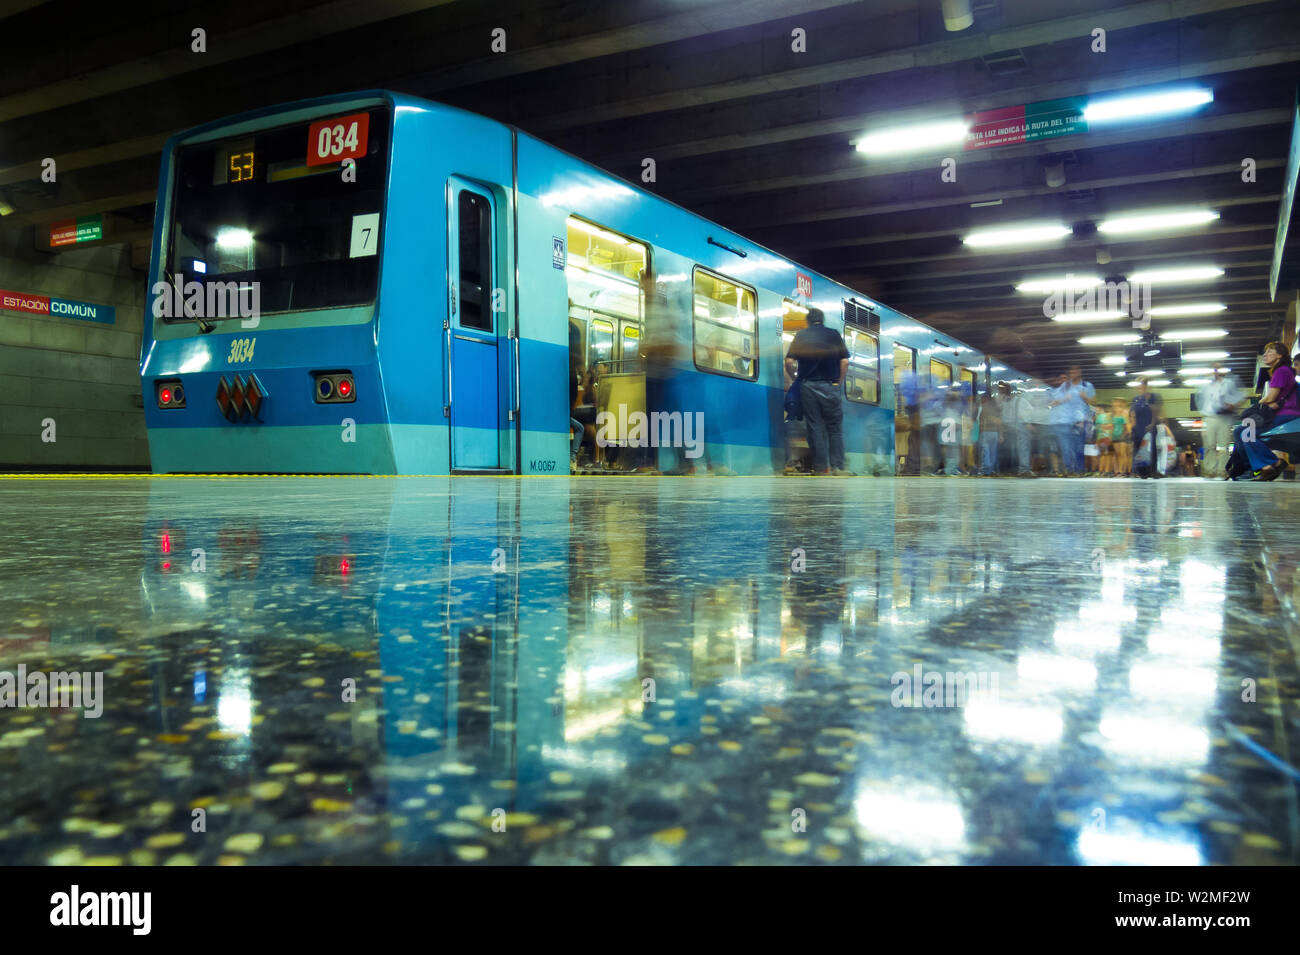 SANTIAGO, CHILE - NOVEMBER 2014: An old Santiago Metro NS74 train at Plaza de Armas station Stock Photo